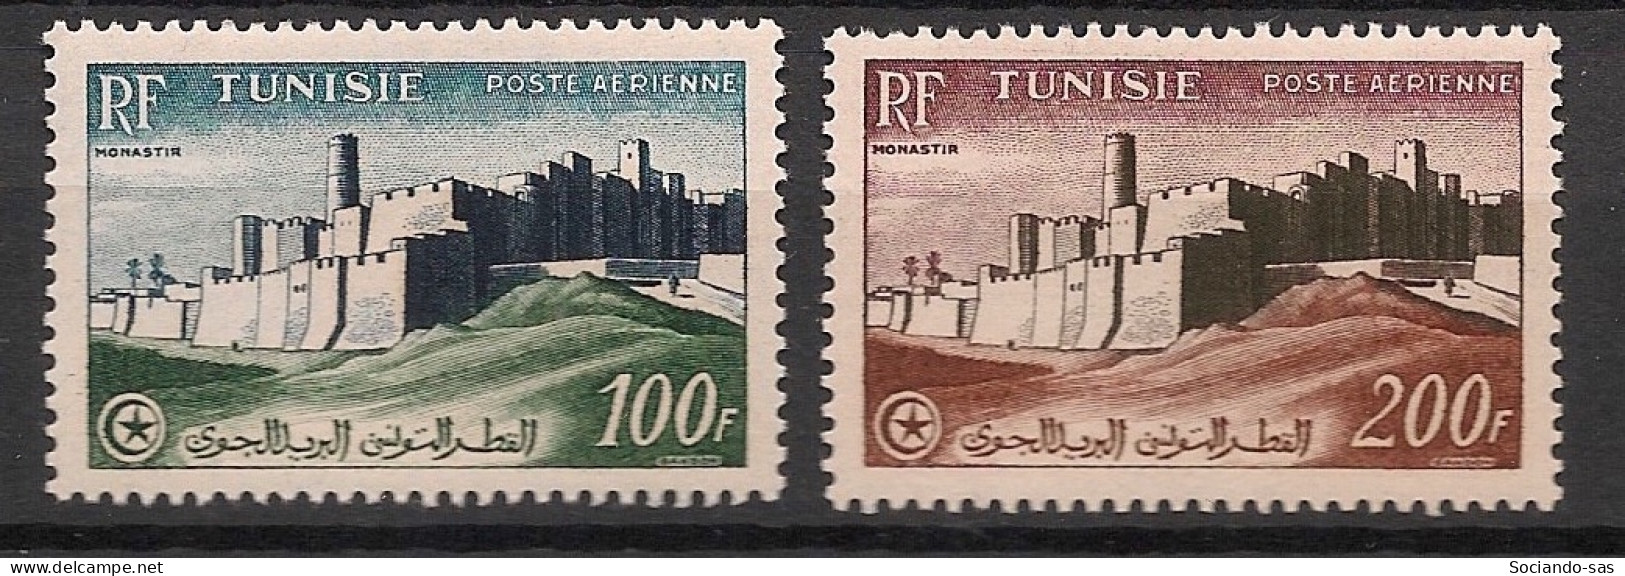 TUNISIE - 1954 - Poste Aérienne PA N°YT. 20 à 21 - Série Complète - Neuf* / MH VF - Luchtpost